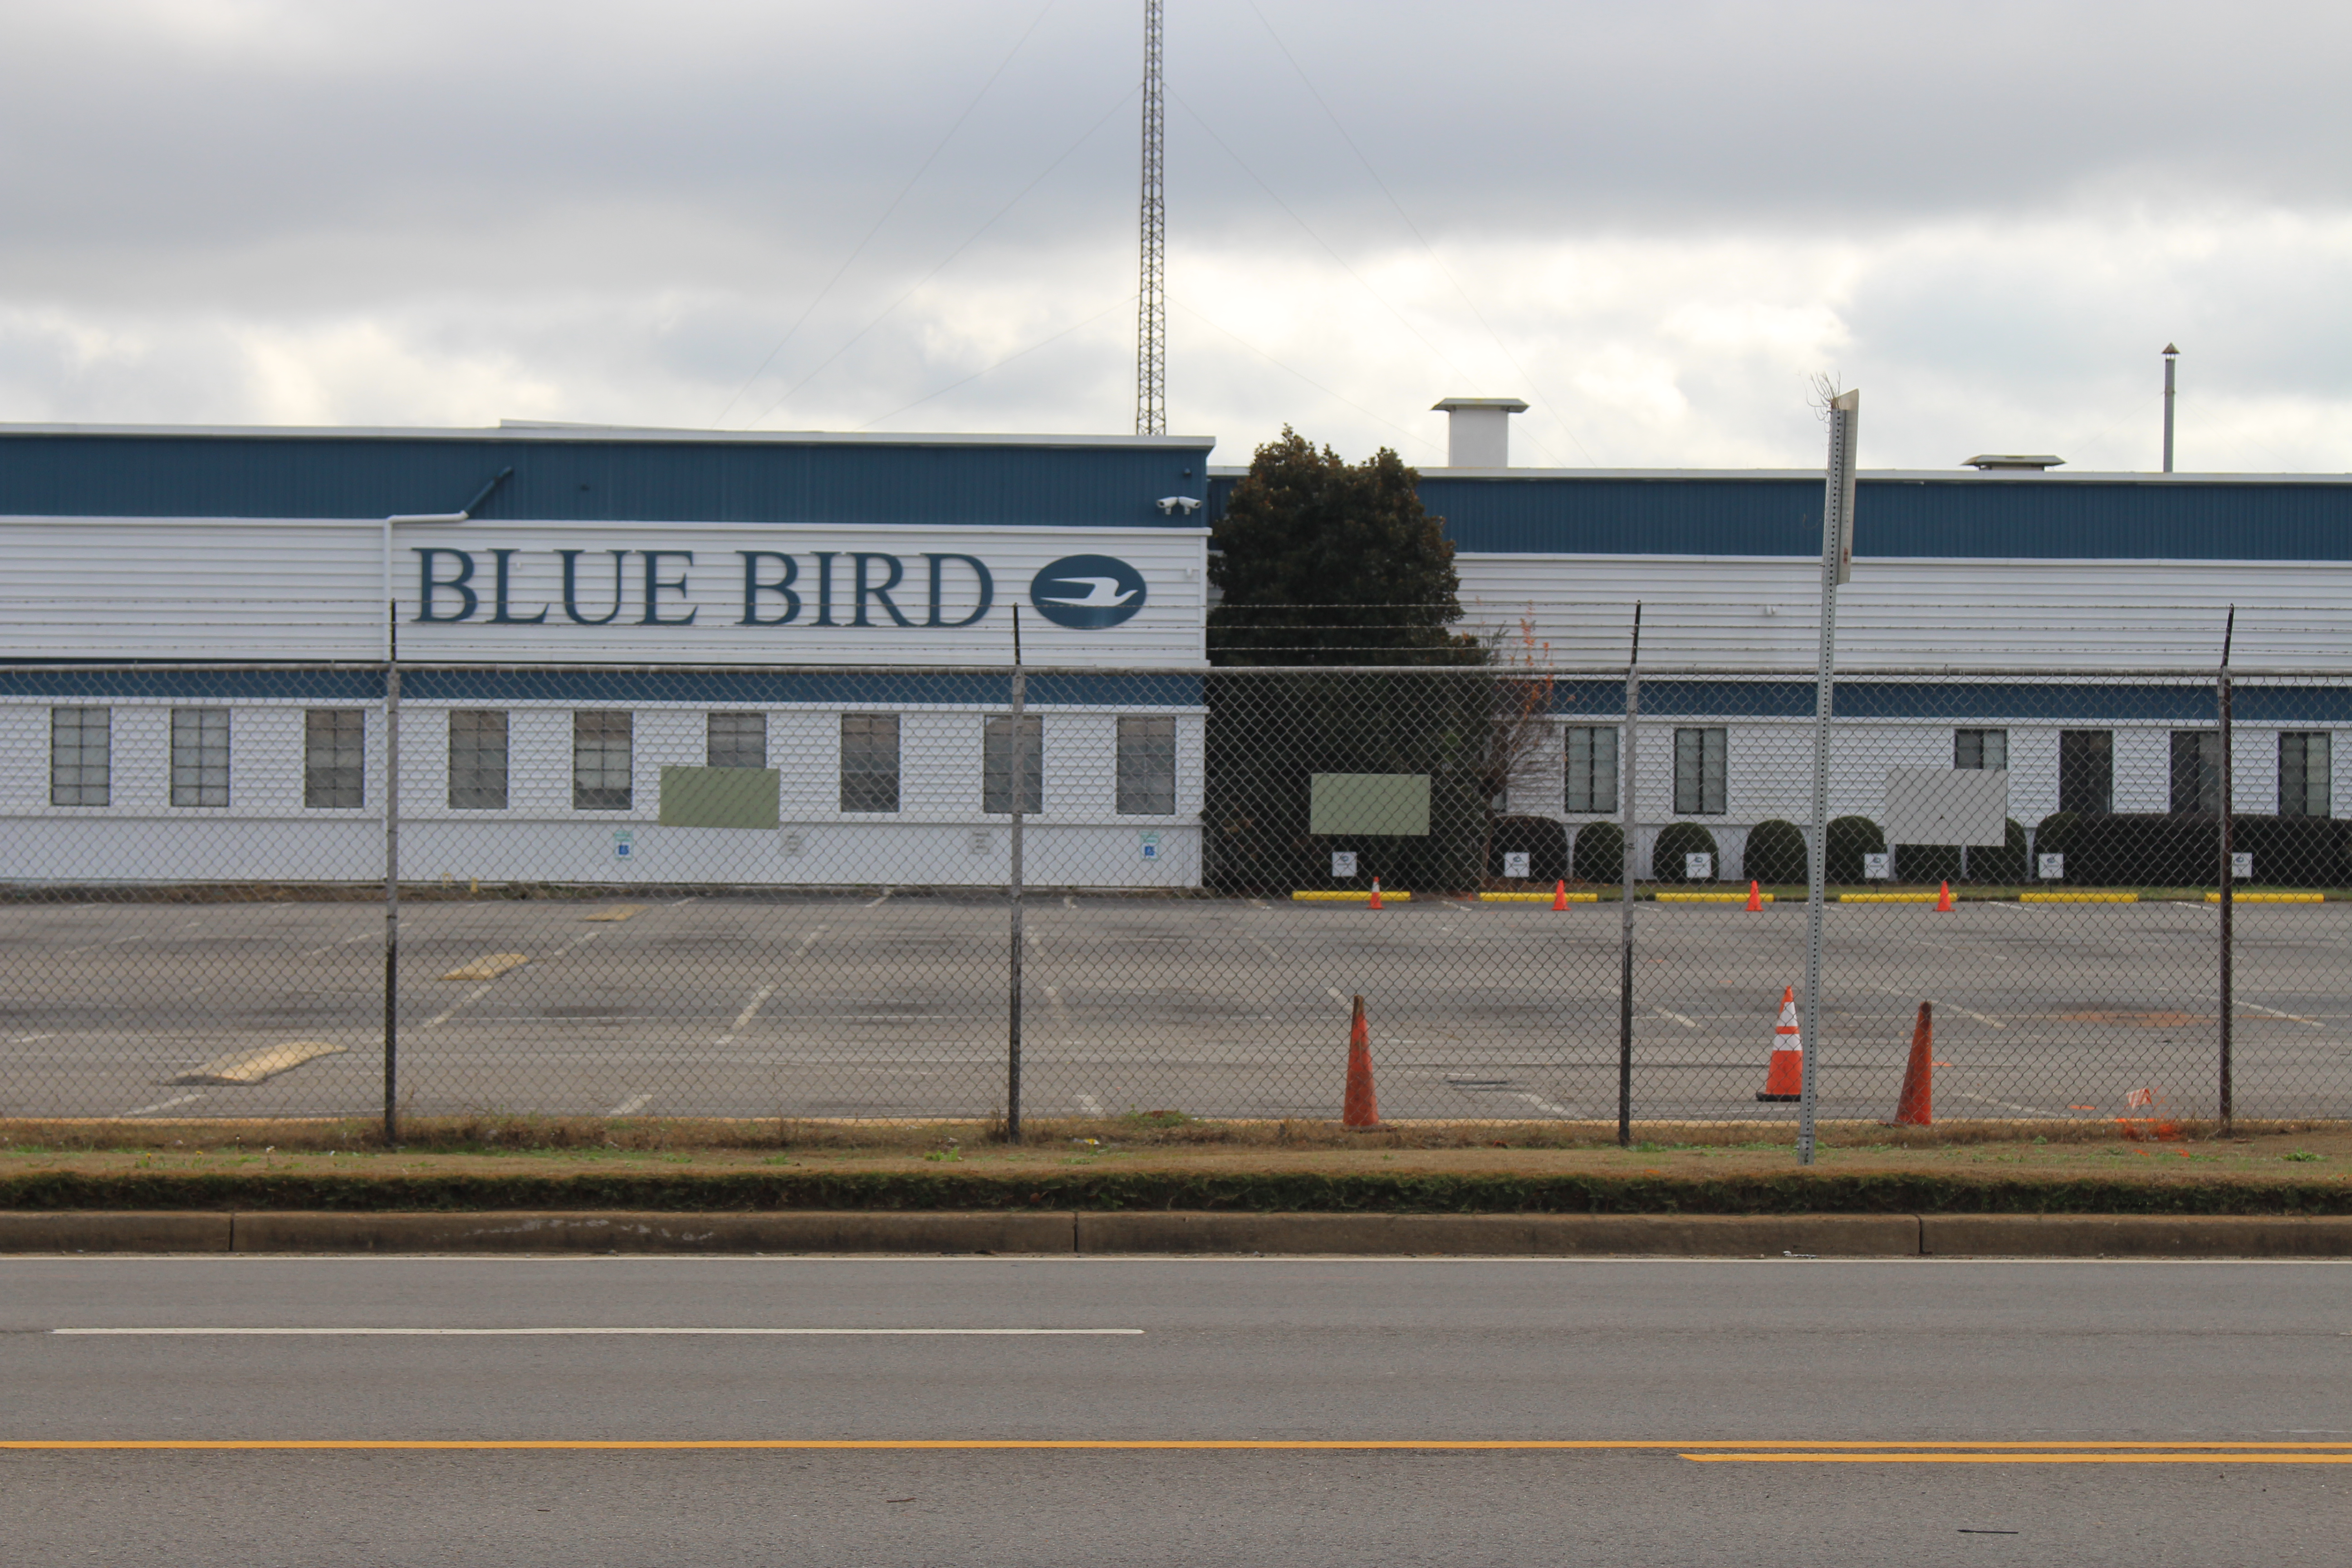 Blue Bird Corporation